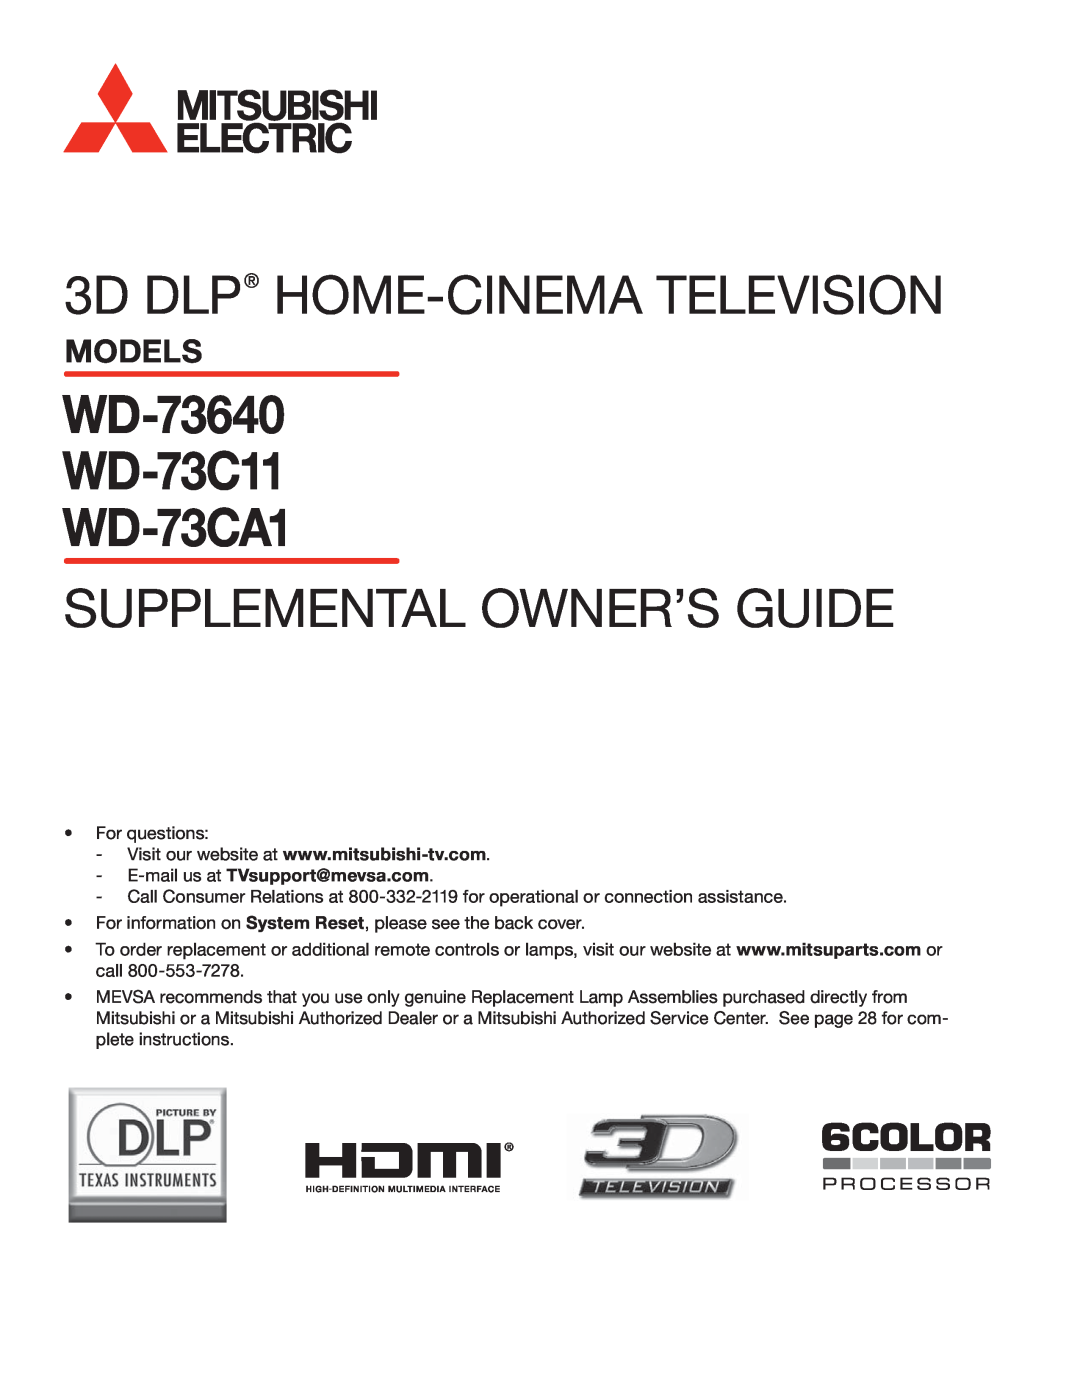 Mitsubishi Electronics manual Models, 3D DLP HOME-CINEMATELEVISION, WD-73640 WD-73C11 WD-73CA1 